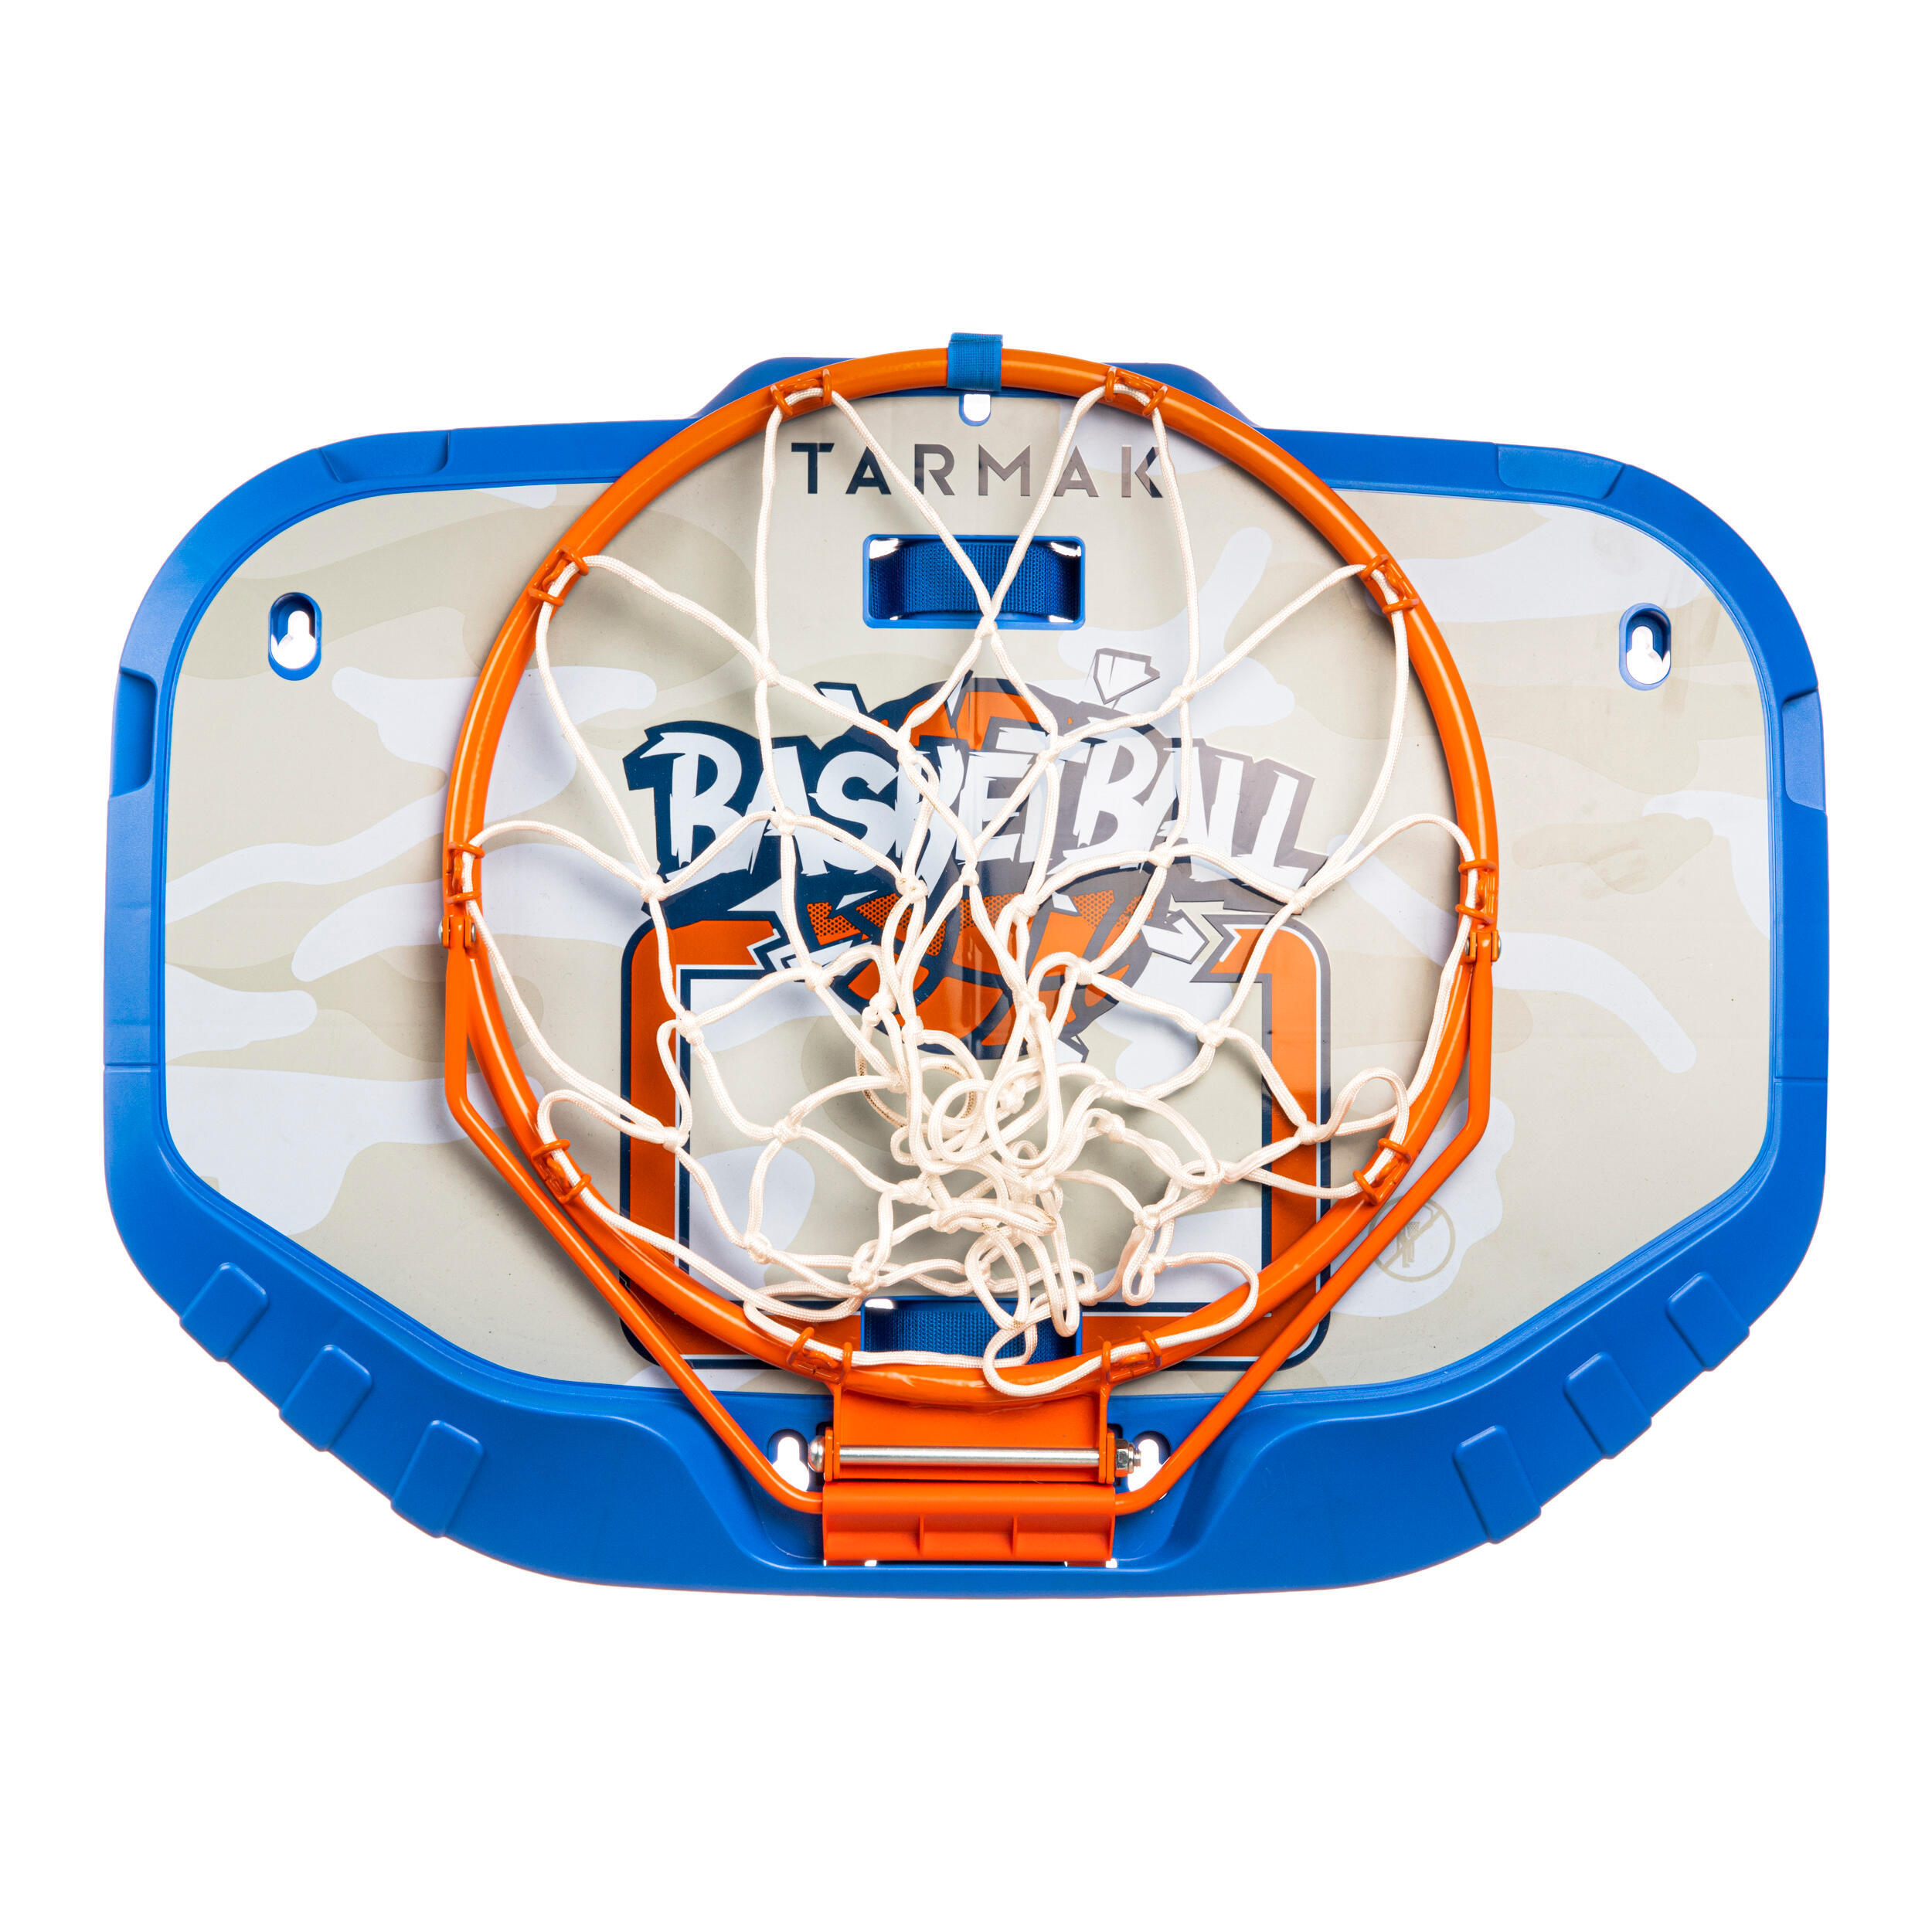 Wall-Mounted Transportable Basketball Hoop Set K900 - Blue/Orange 2/5